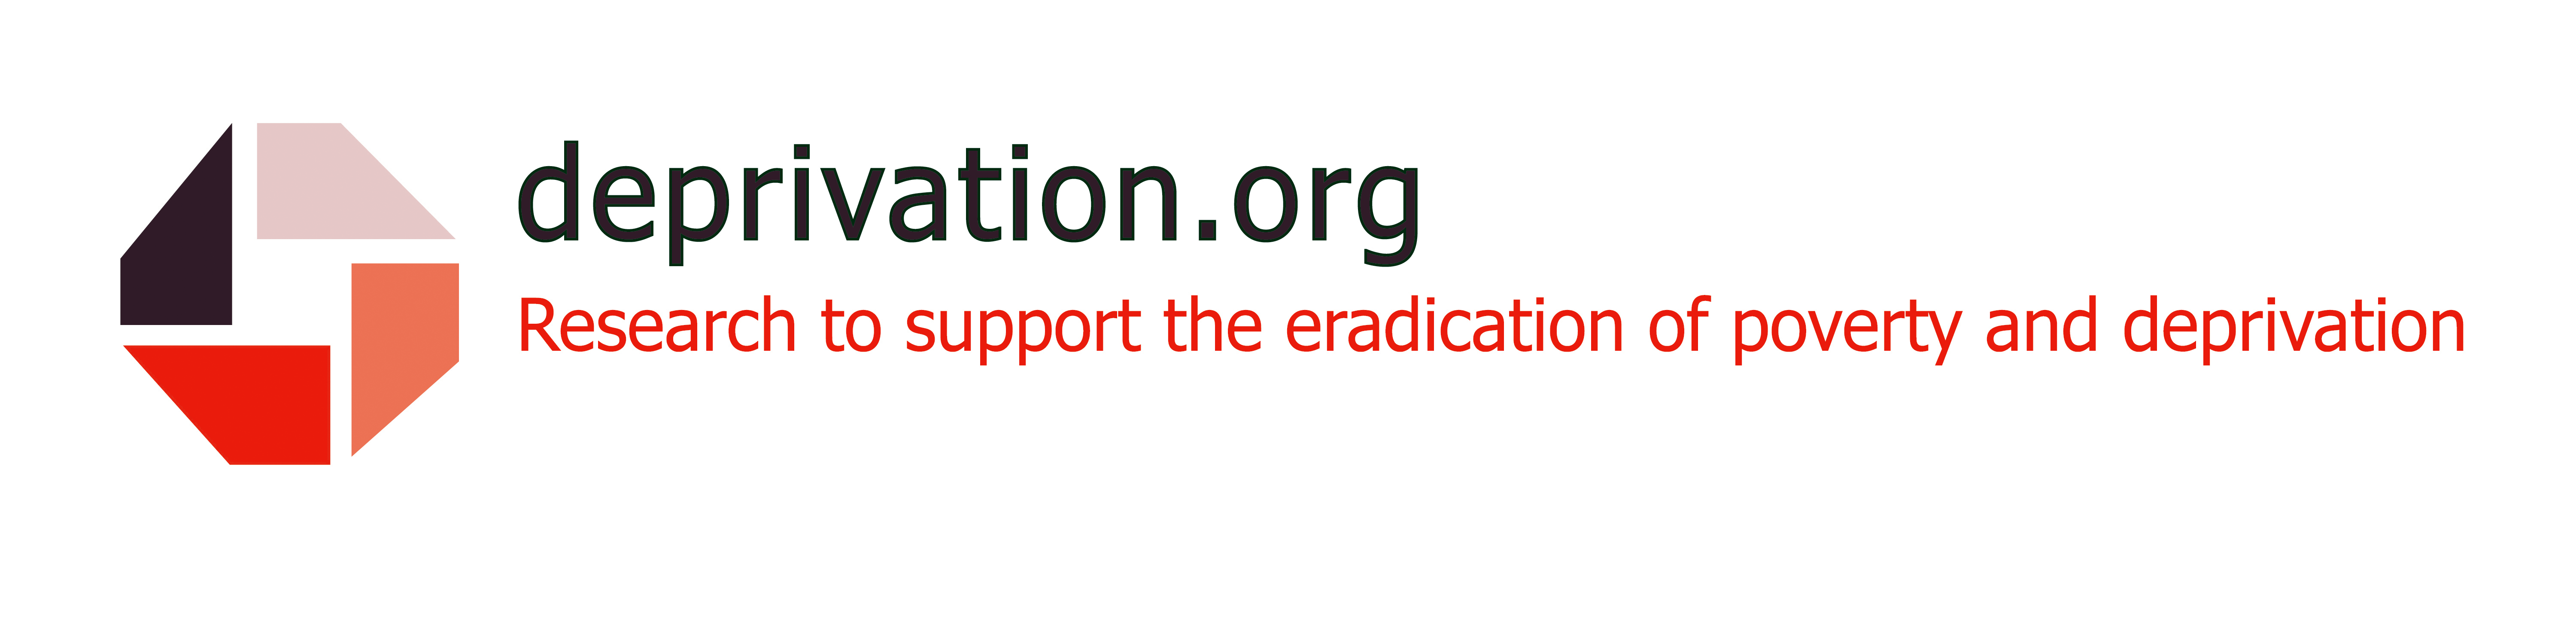 Deprivation.org